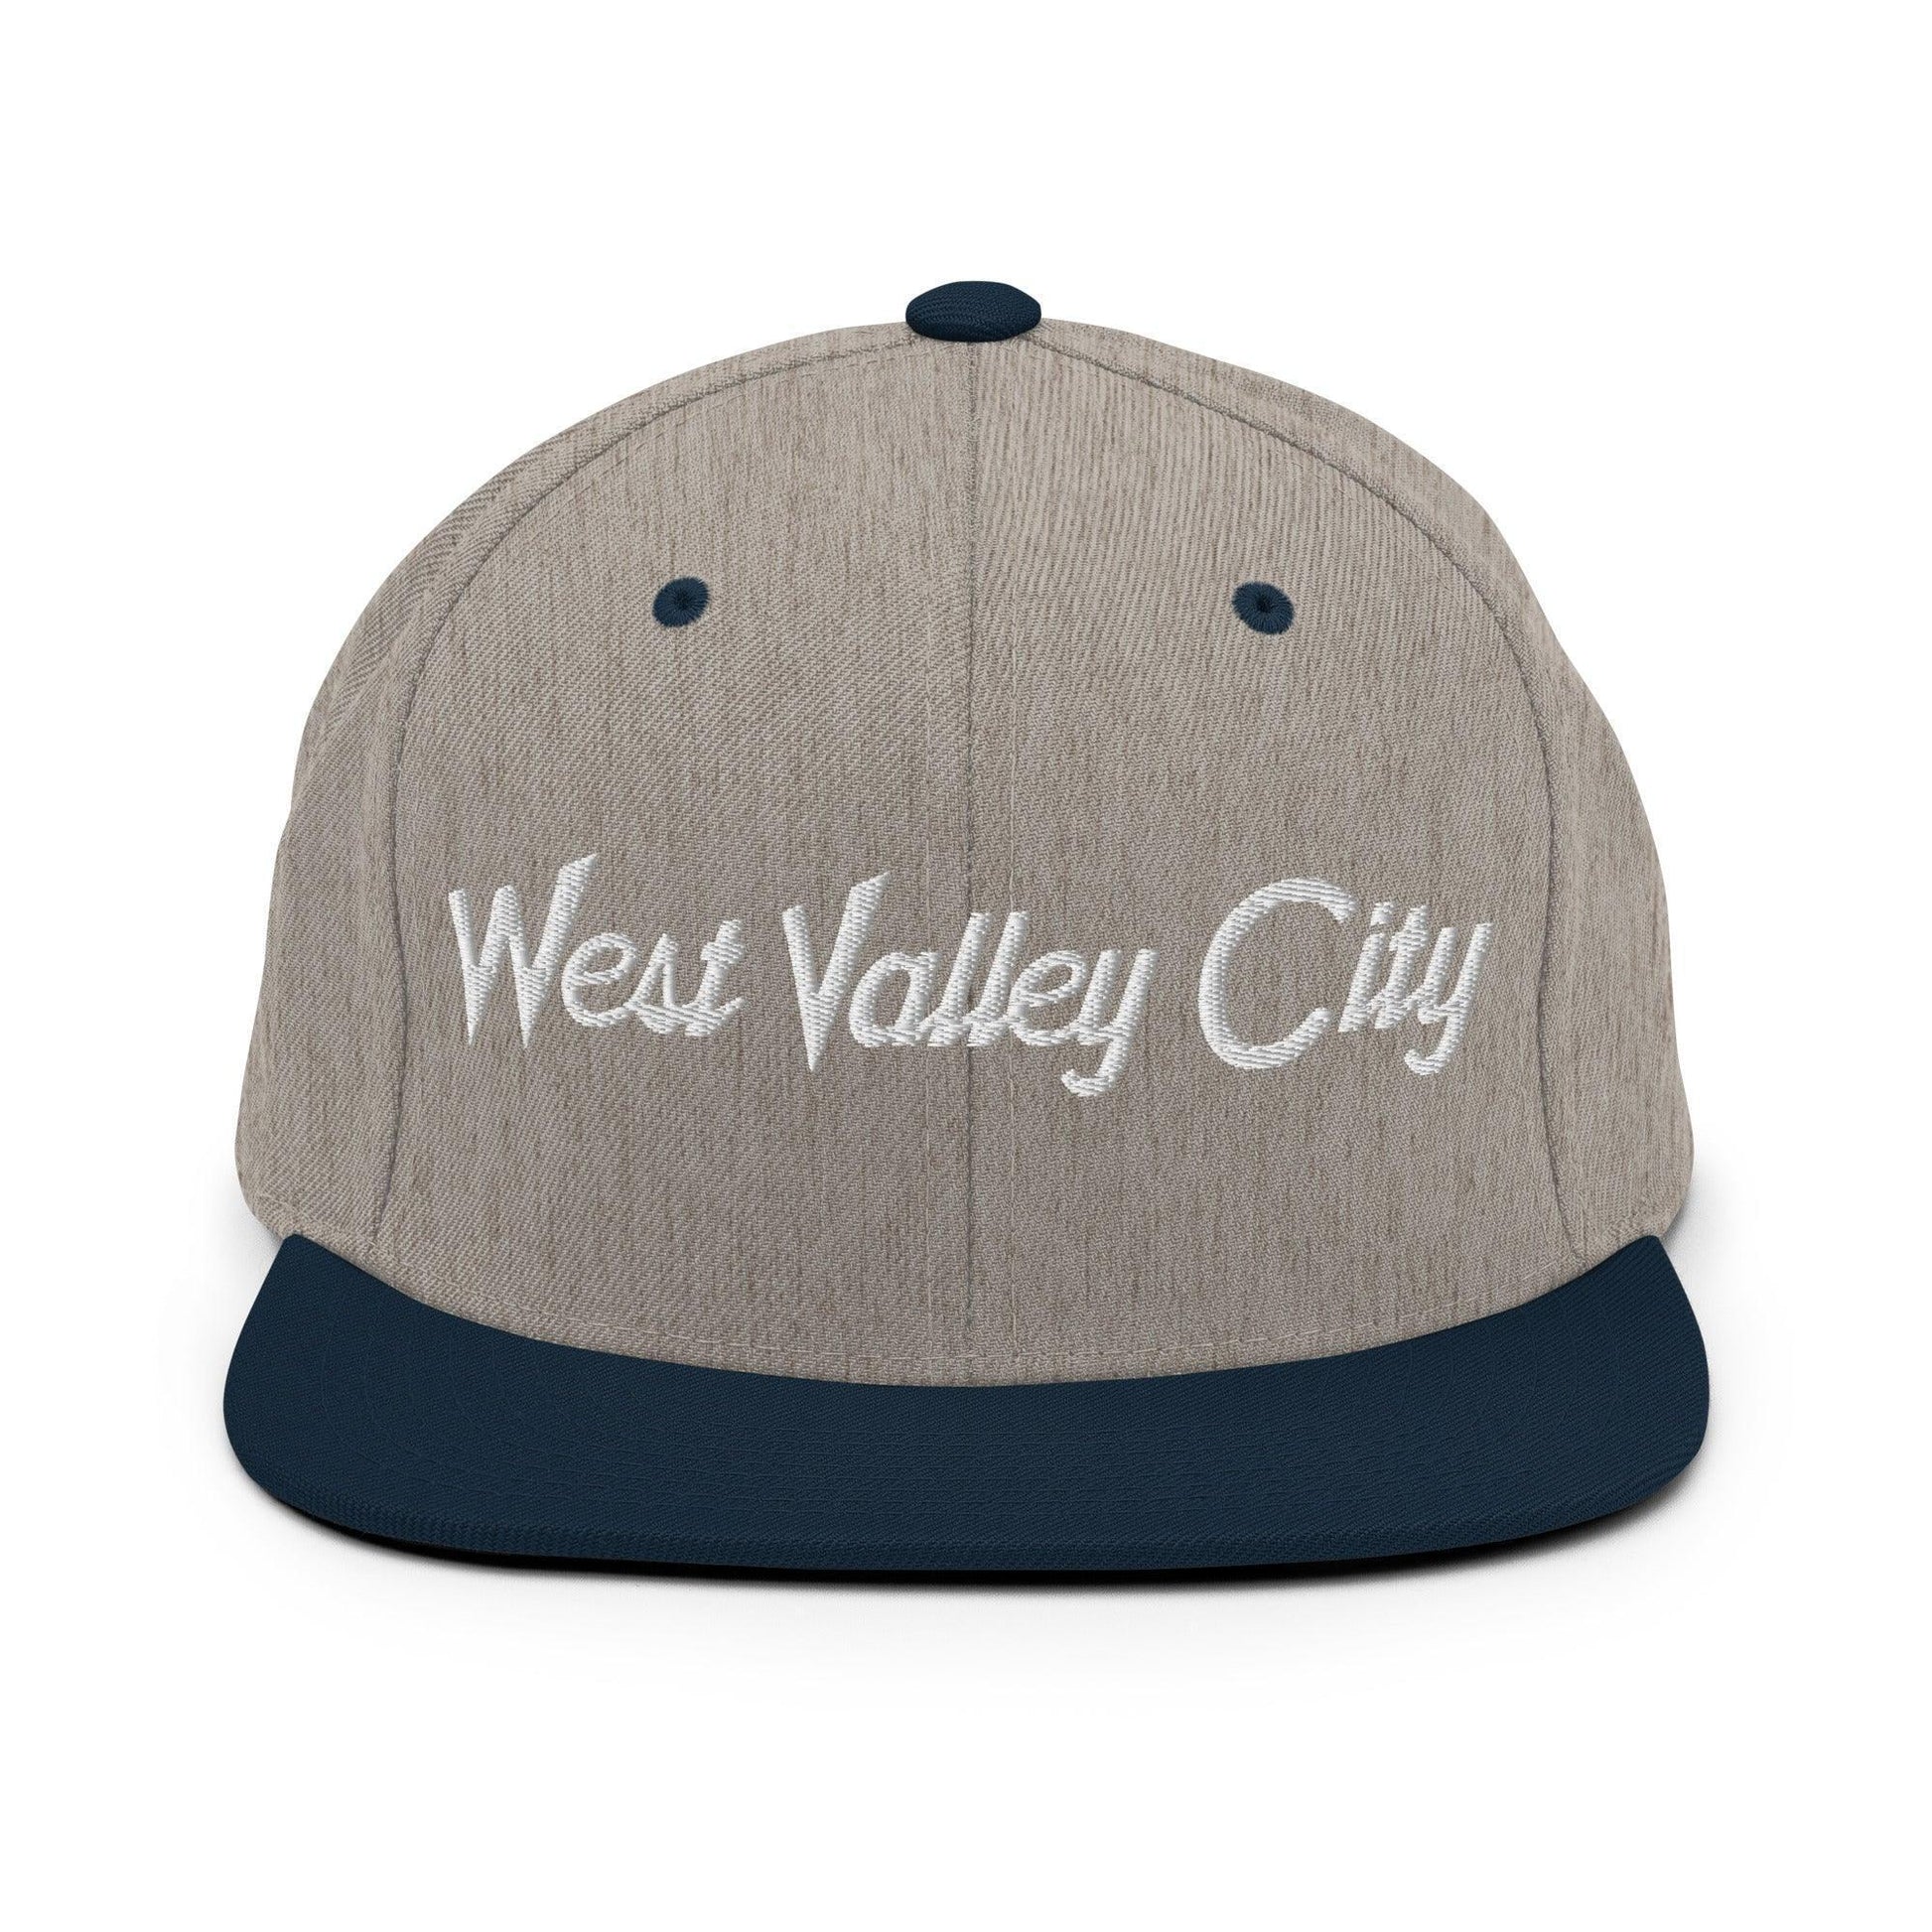 West Valley City Script Snapback Hat Heather Grey/ Navy